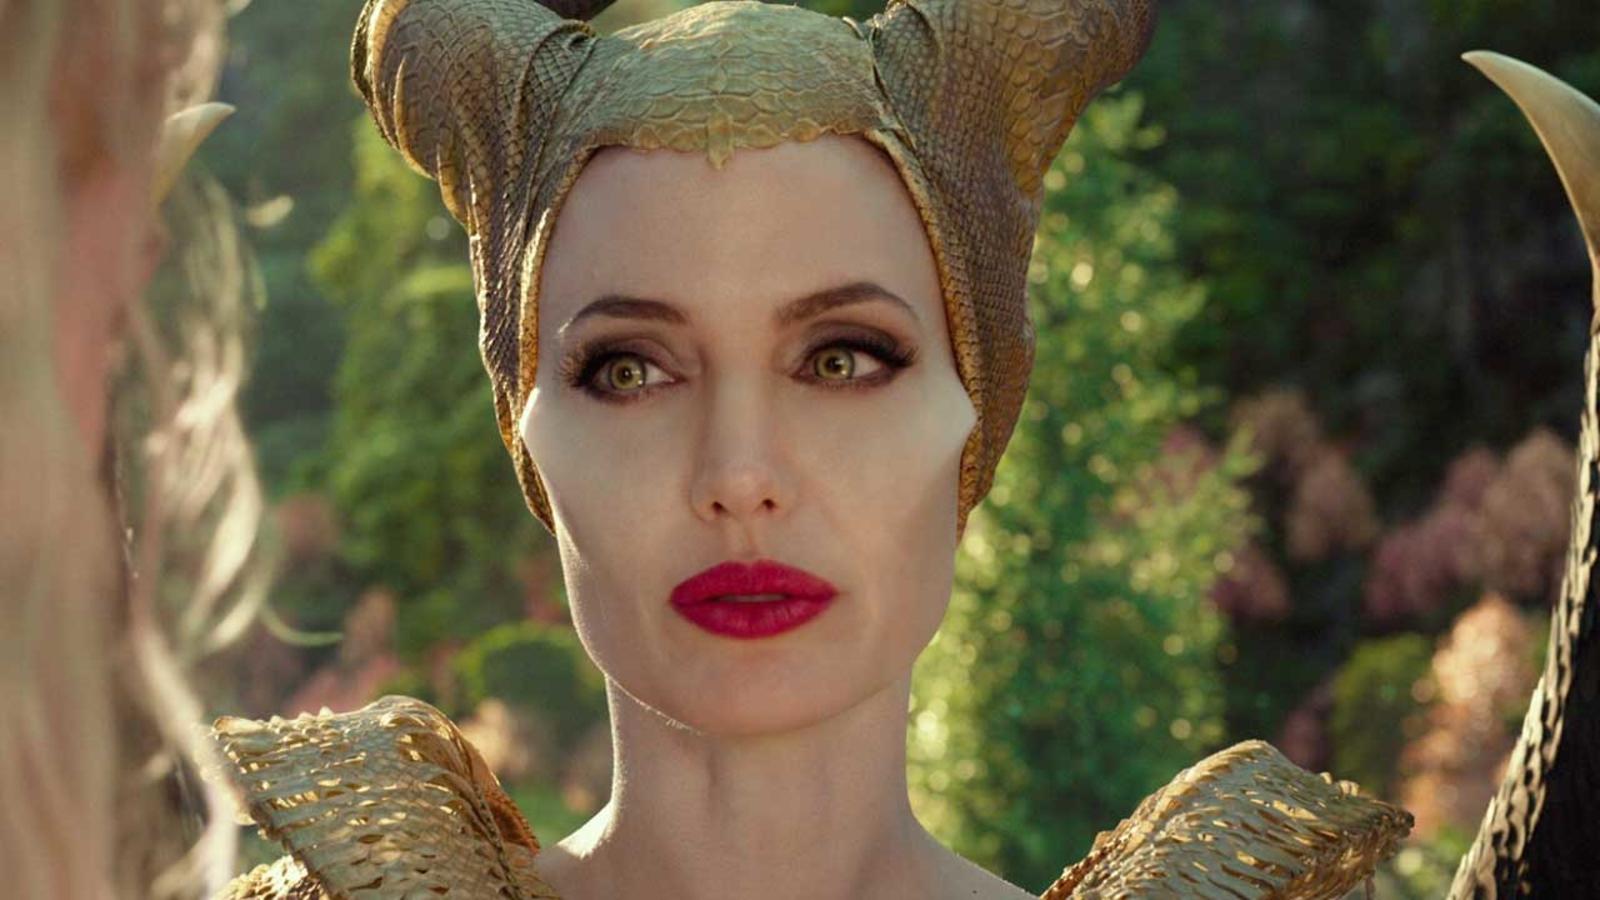 Disney's 'Maleficent' sequel drops new trailer